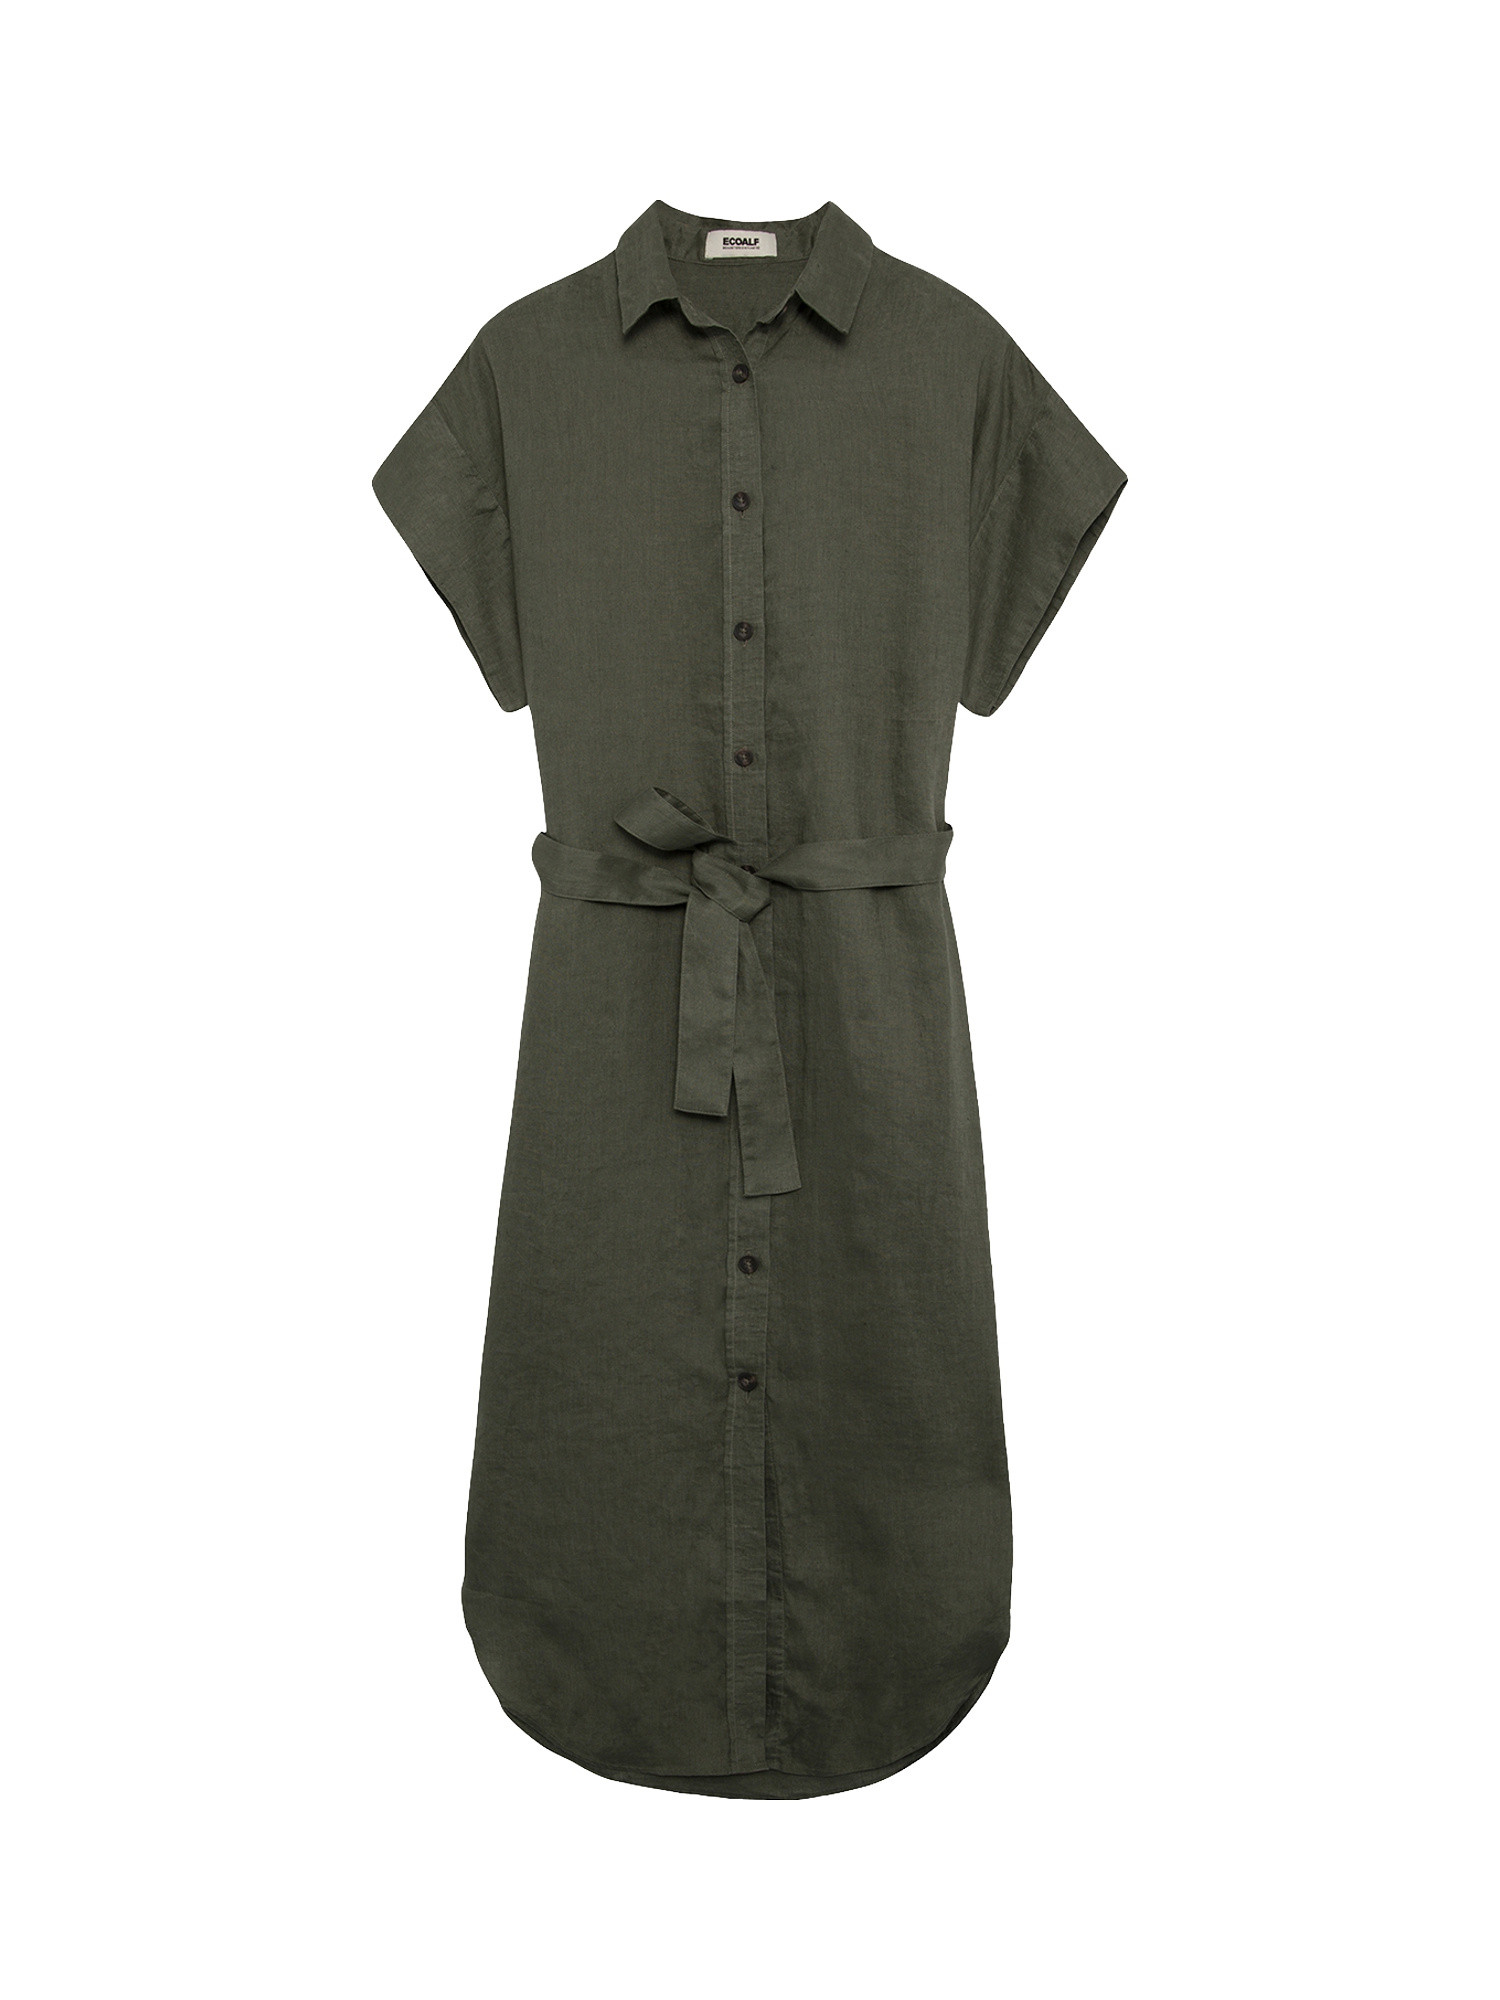 Ecoalf - Amatista dress with belt, Olive Green, large image number 0